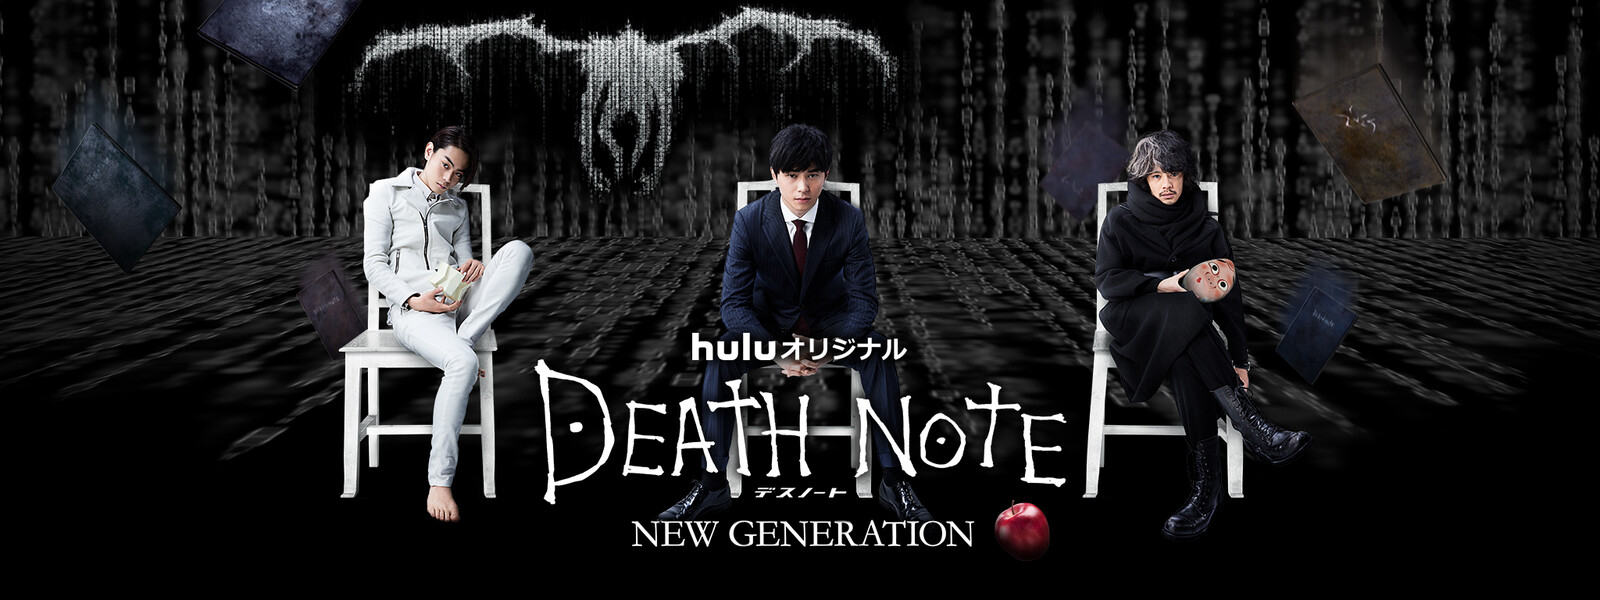 DEATH NOTE デスノート NEW GENERATIONの動画 - DEATH NOTE